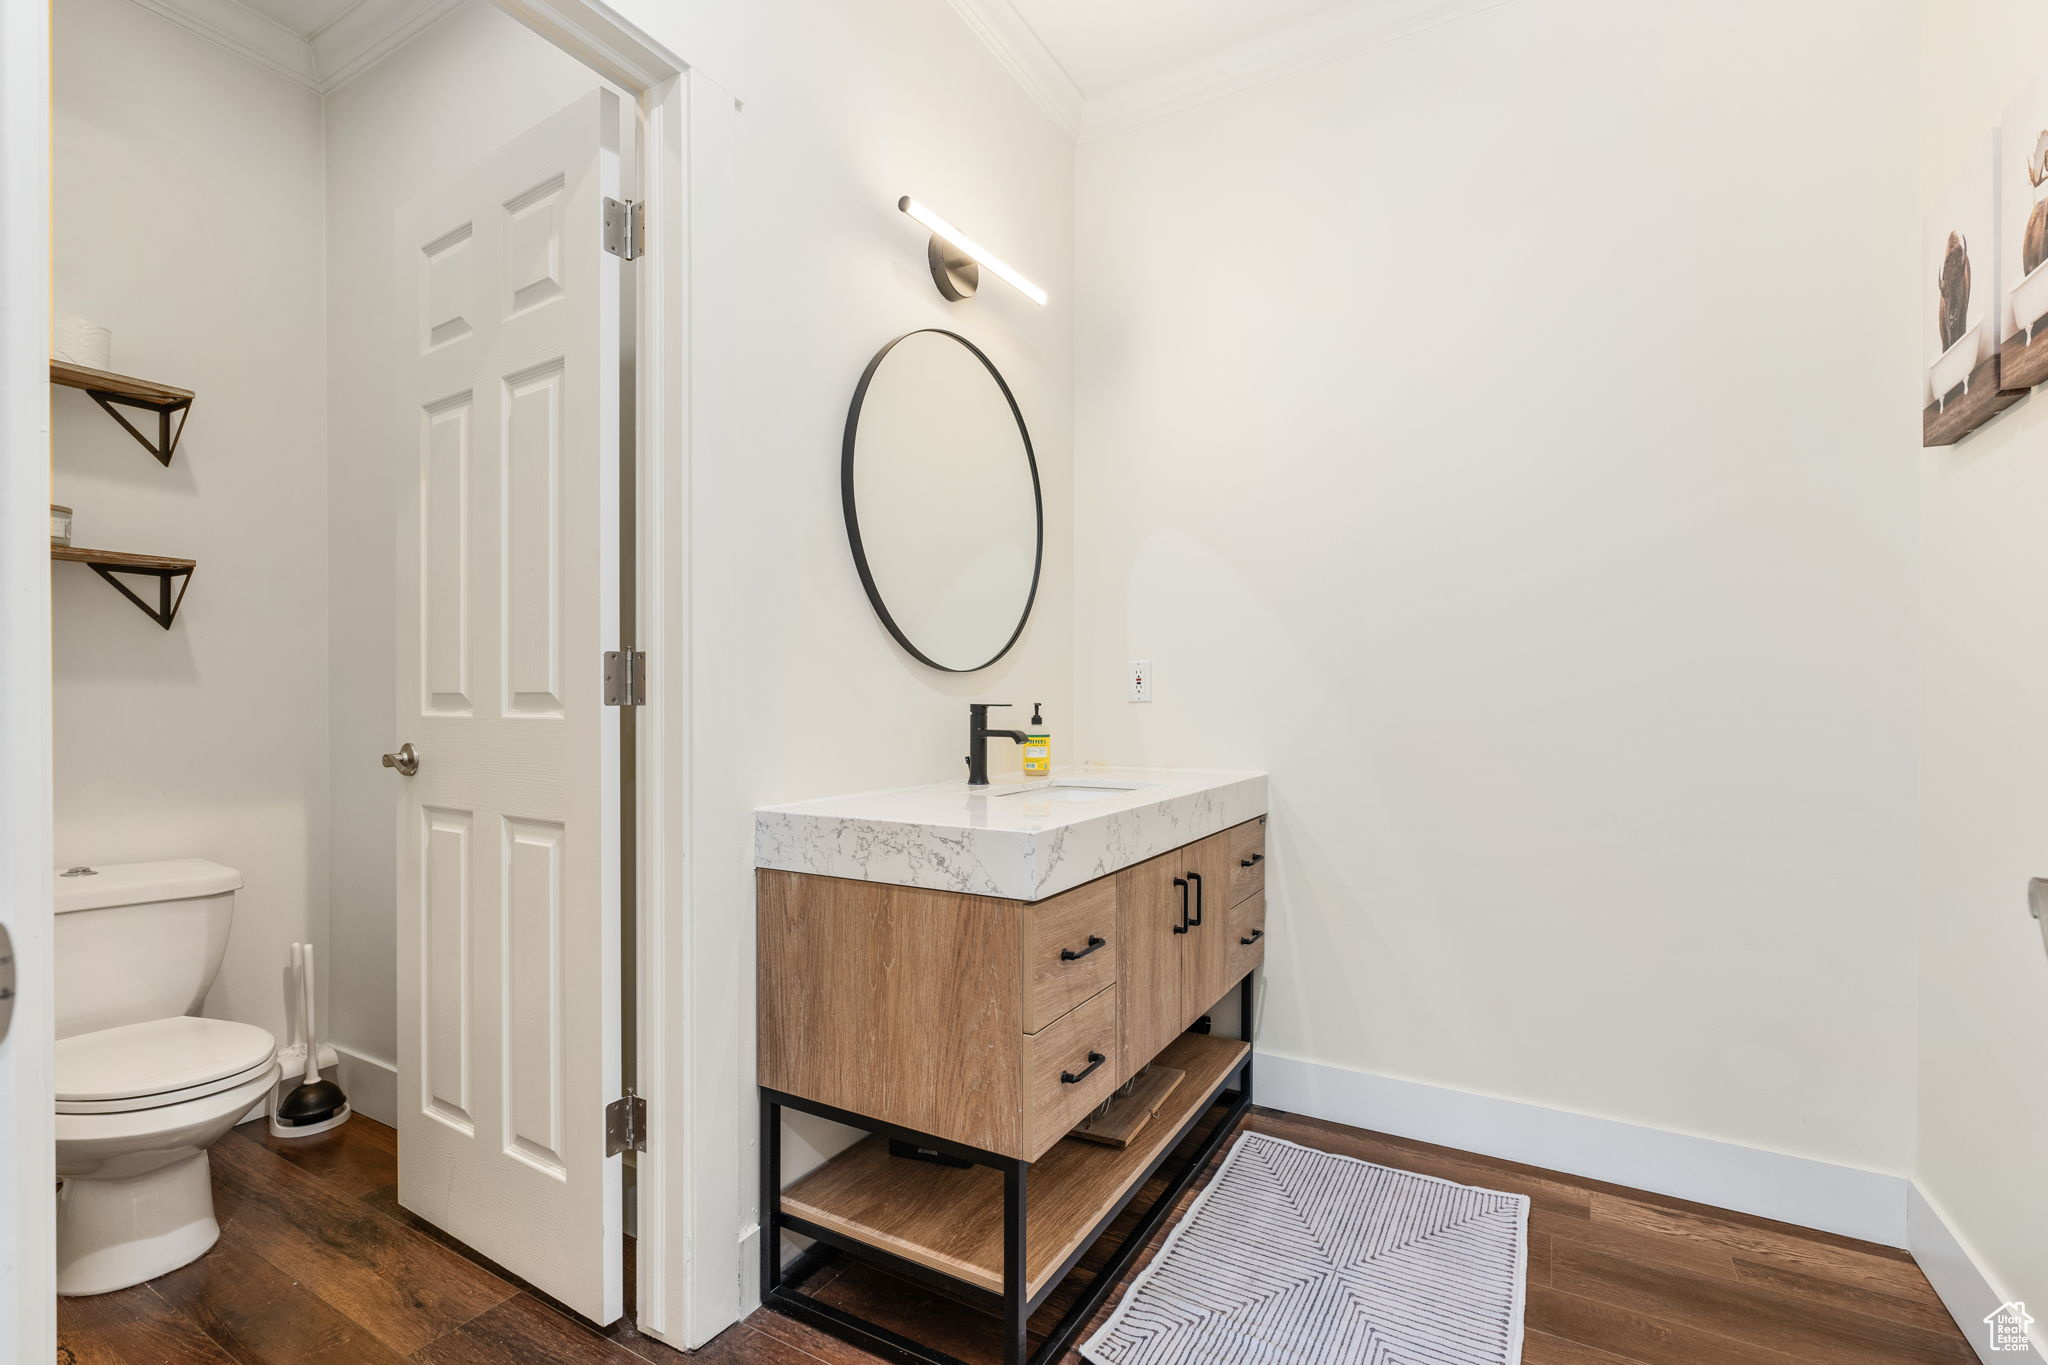 Bathroom featuring wood-type flooring, vanity, crown molding, and toilet